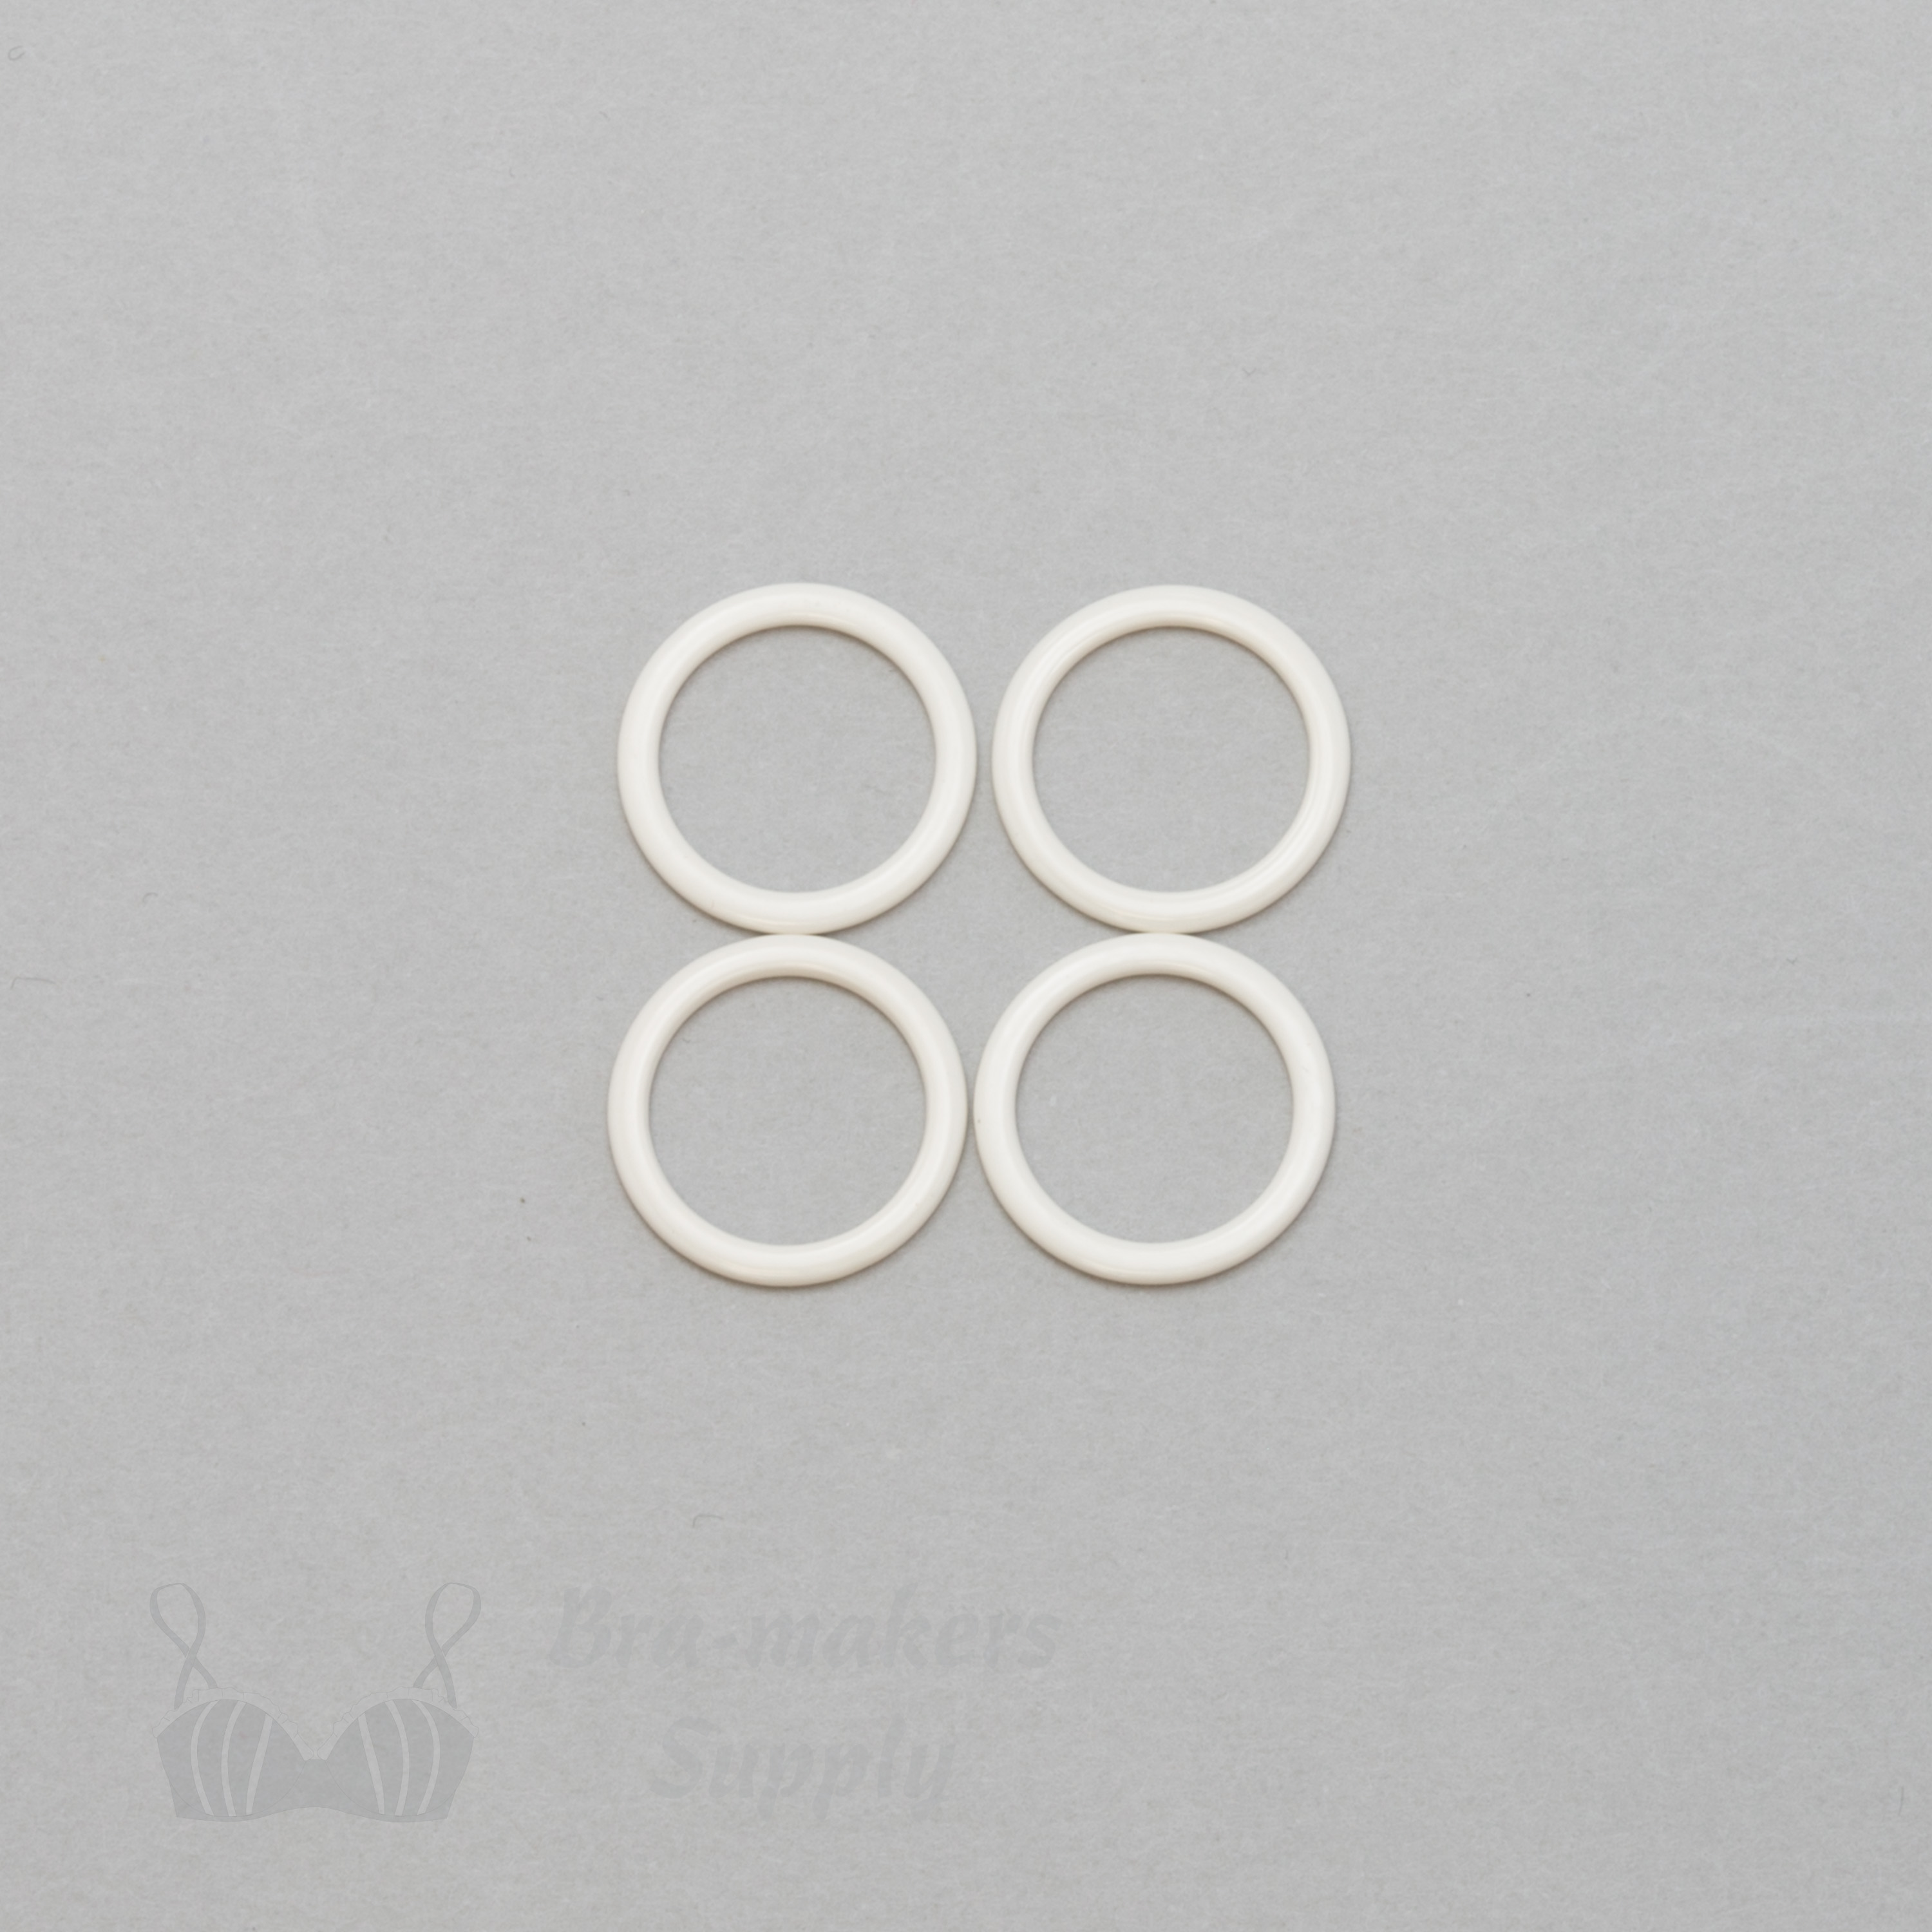 half inch 12mm RM-40 R PK4 ivory nylon coated metal rings sliders or winter white Pantone 11-0507 from Bra-Makers Supply 4 rings shown